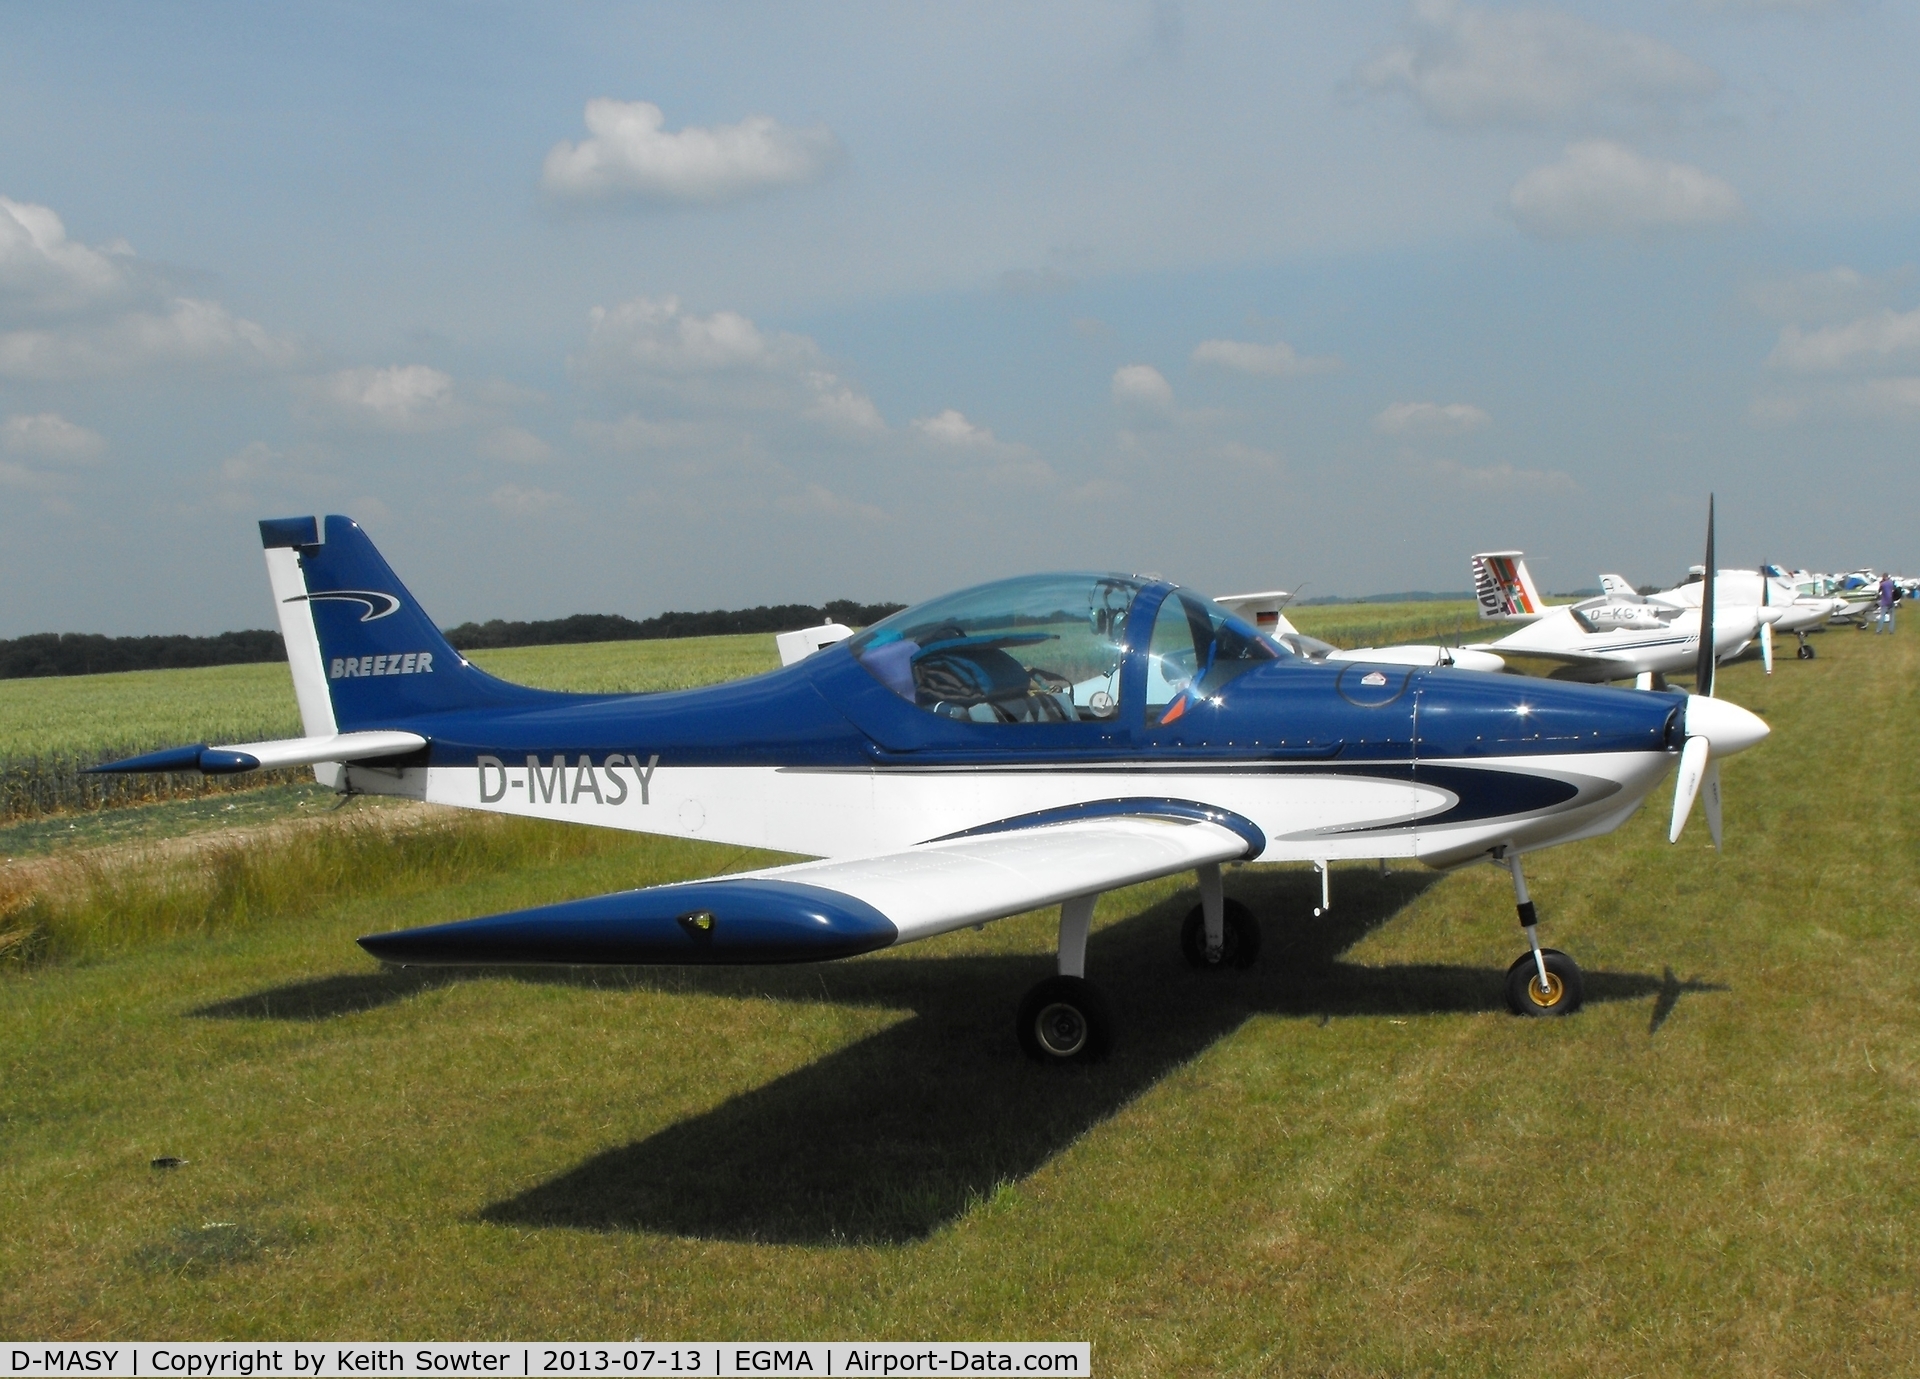 D-MASY, Aerostyle Breezer C/N 022, Visiting aircraft